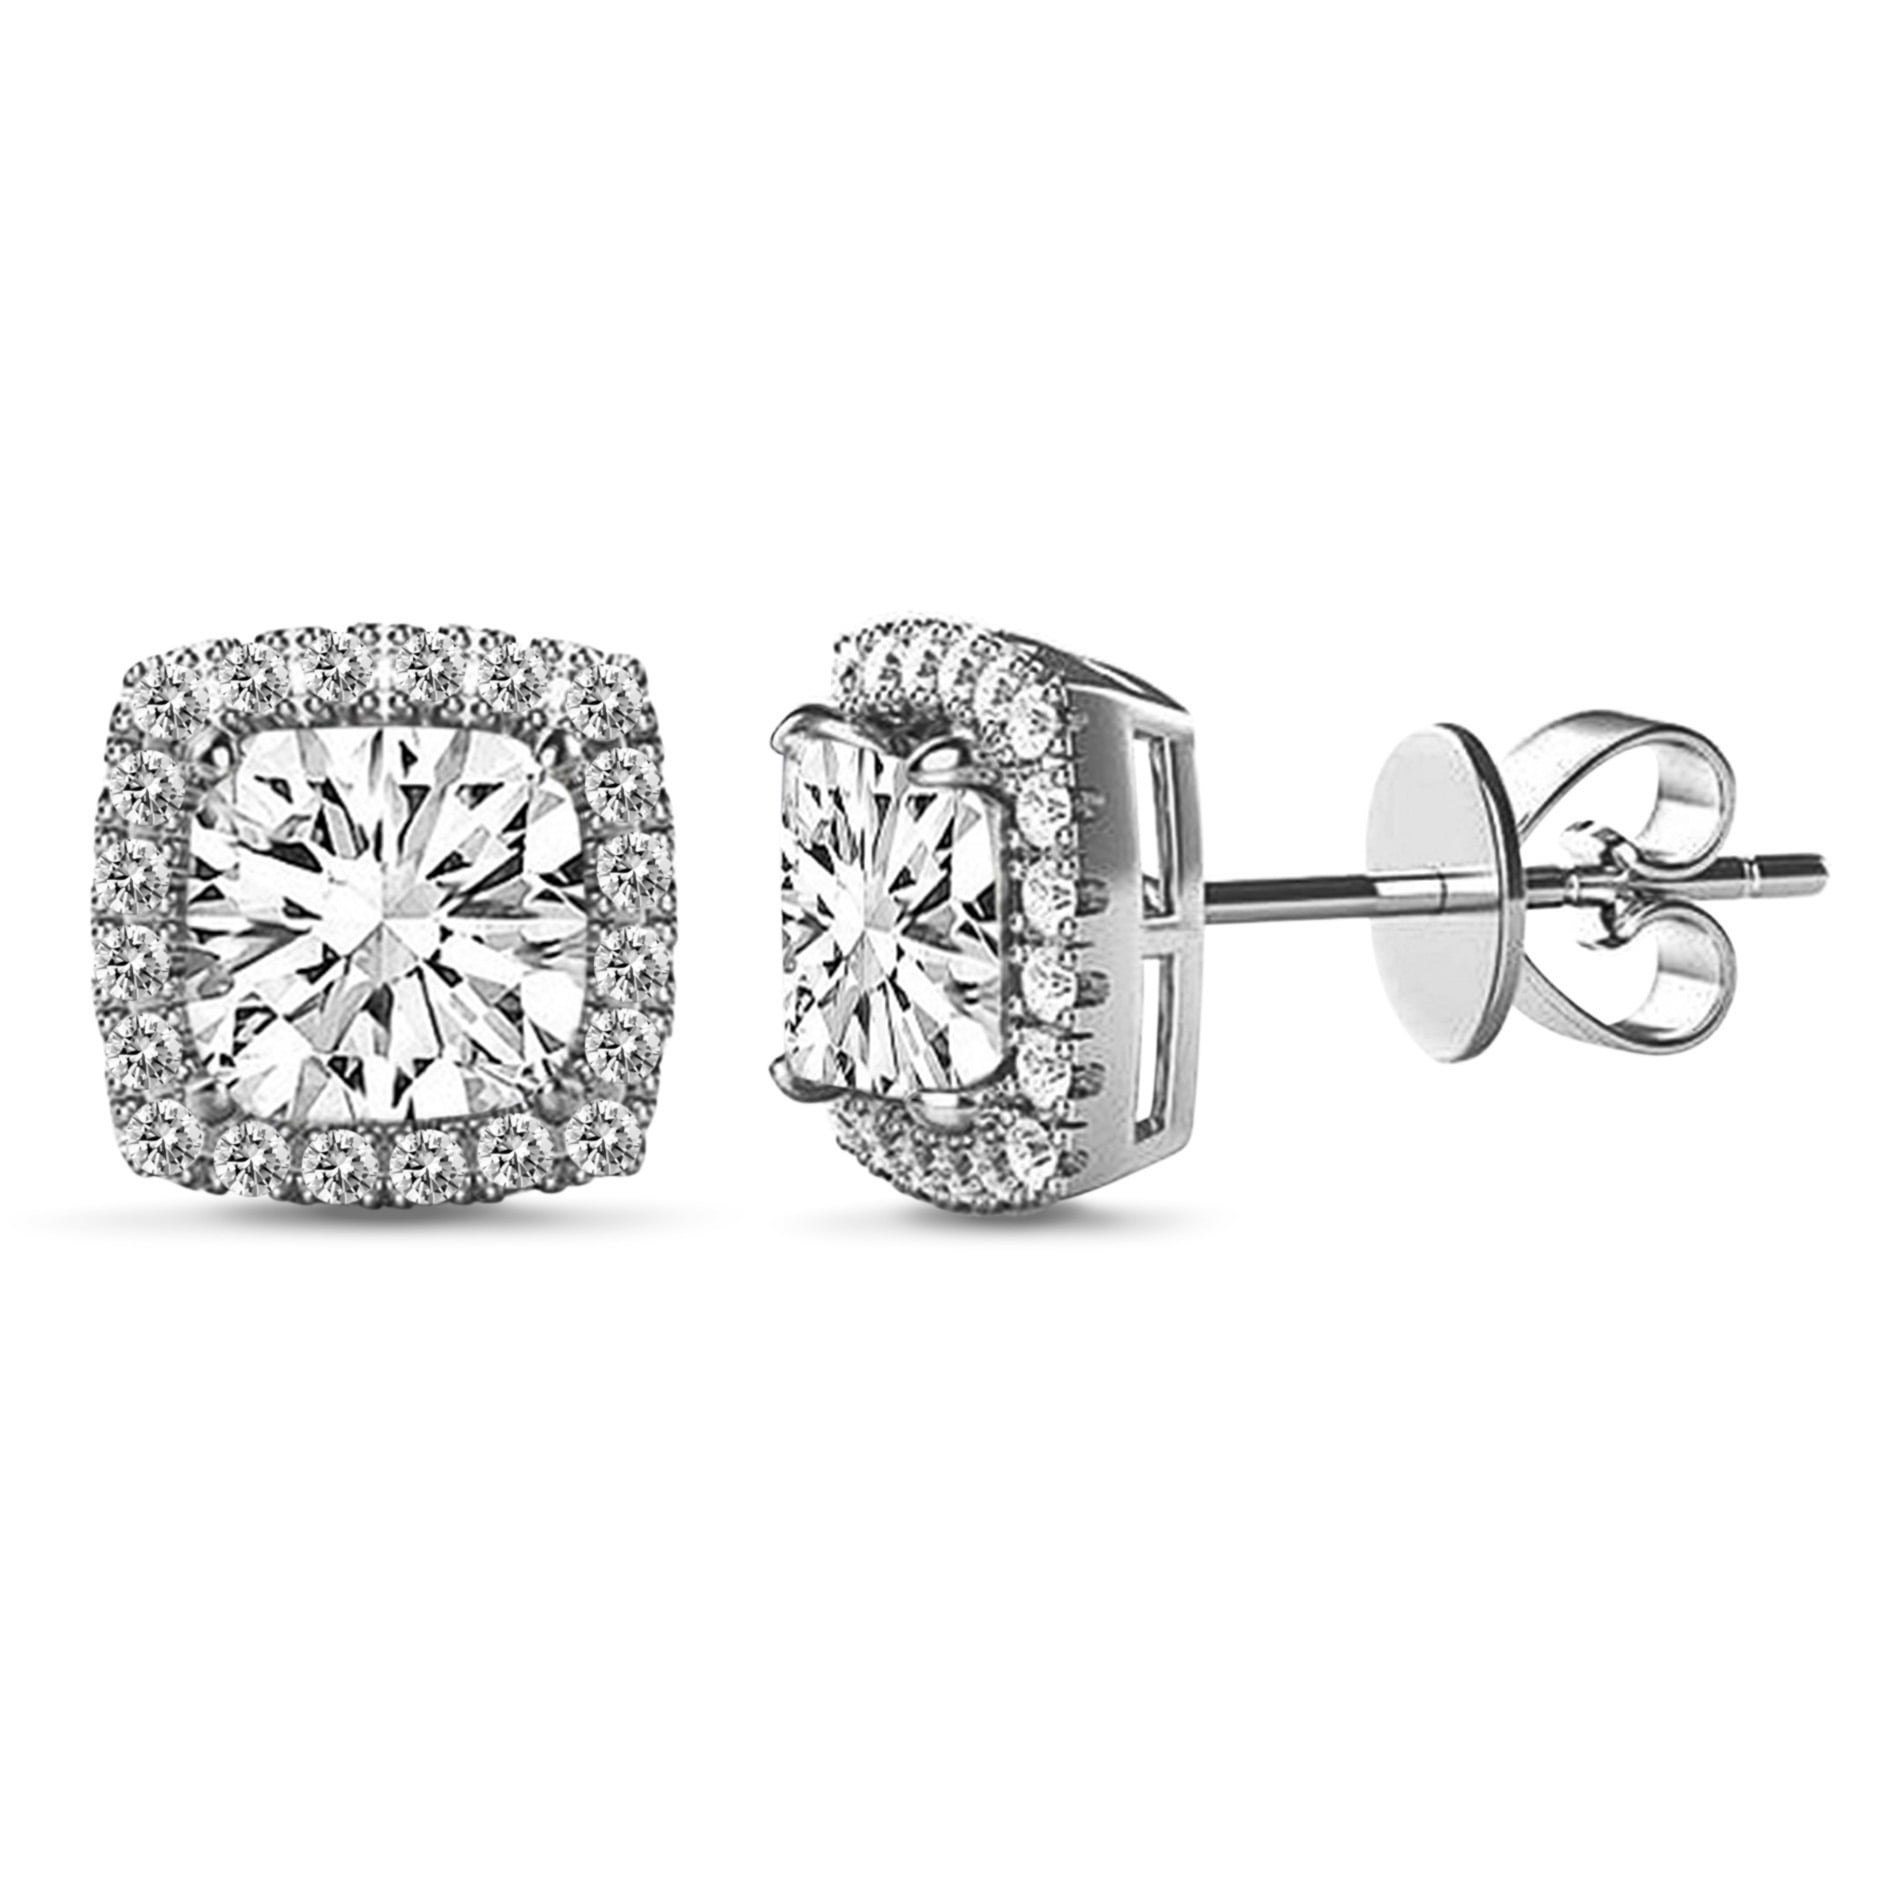 Details about   Diamond Treats 925 Sterling Silver Happy Face Earrings Jewellery Zirconia Stones 